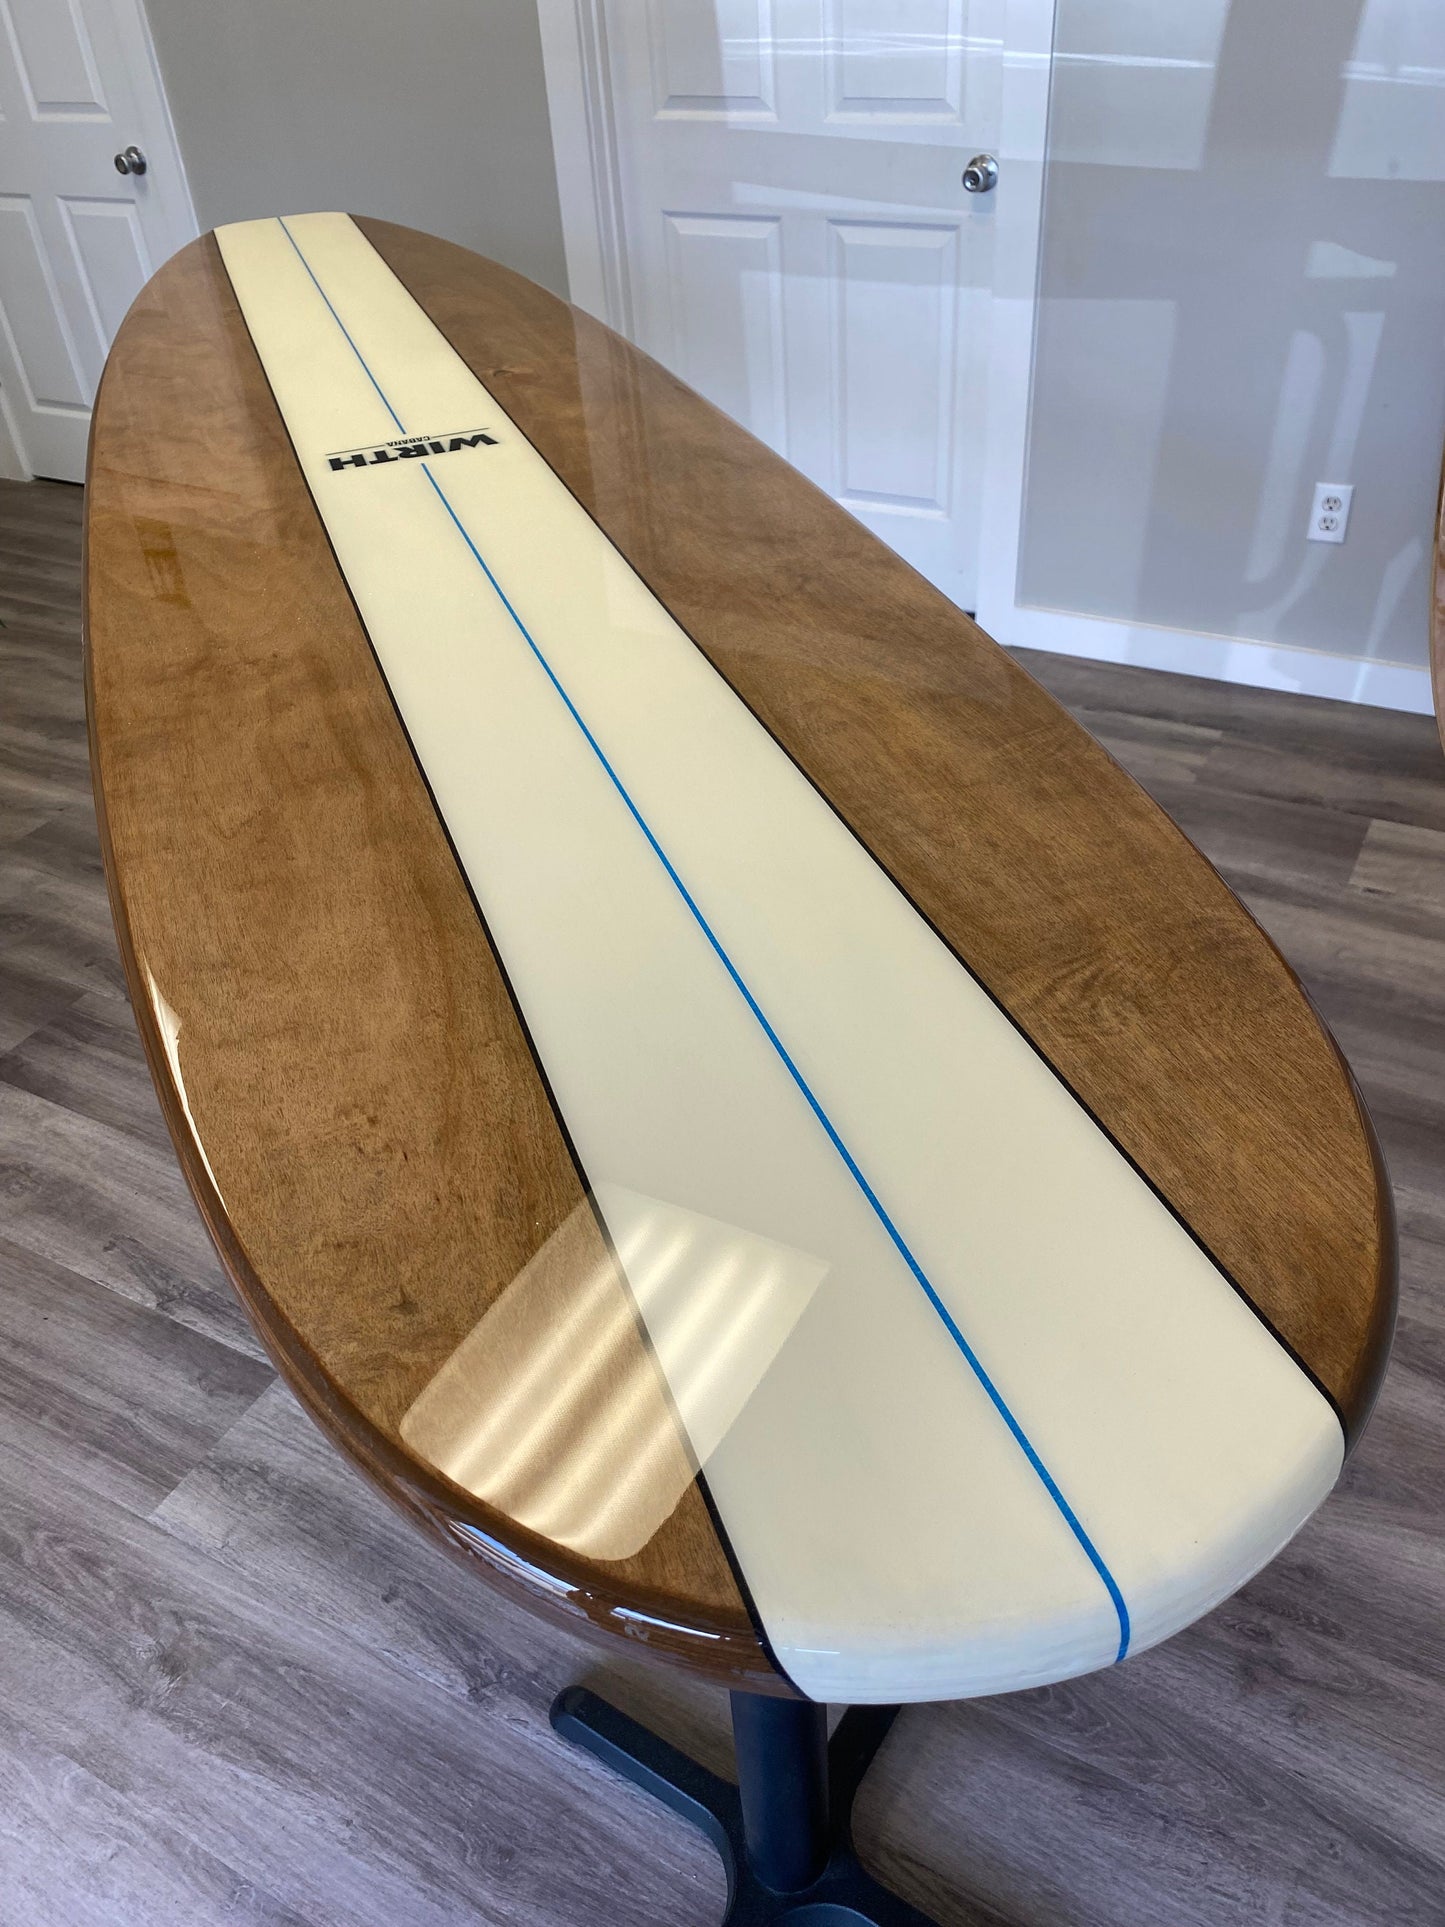 The Drifty Padillac Surfboard Bar Top